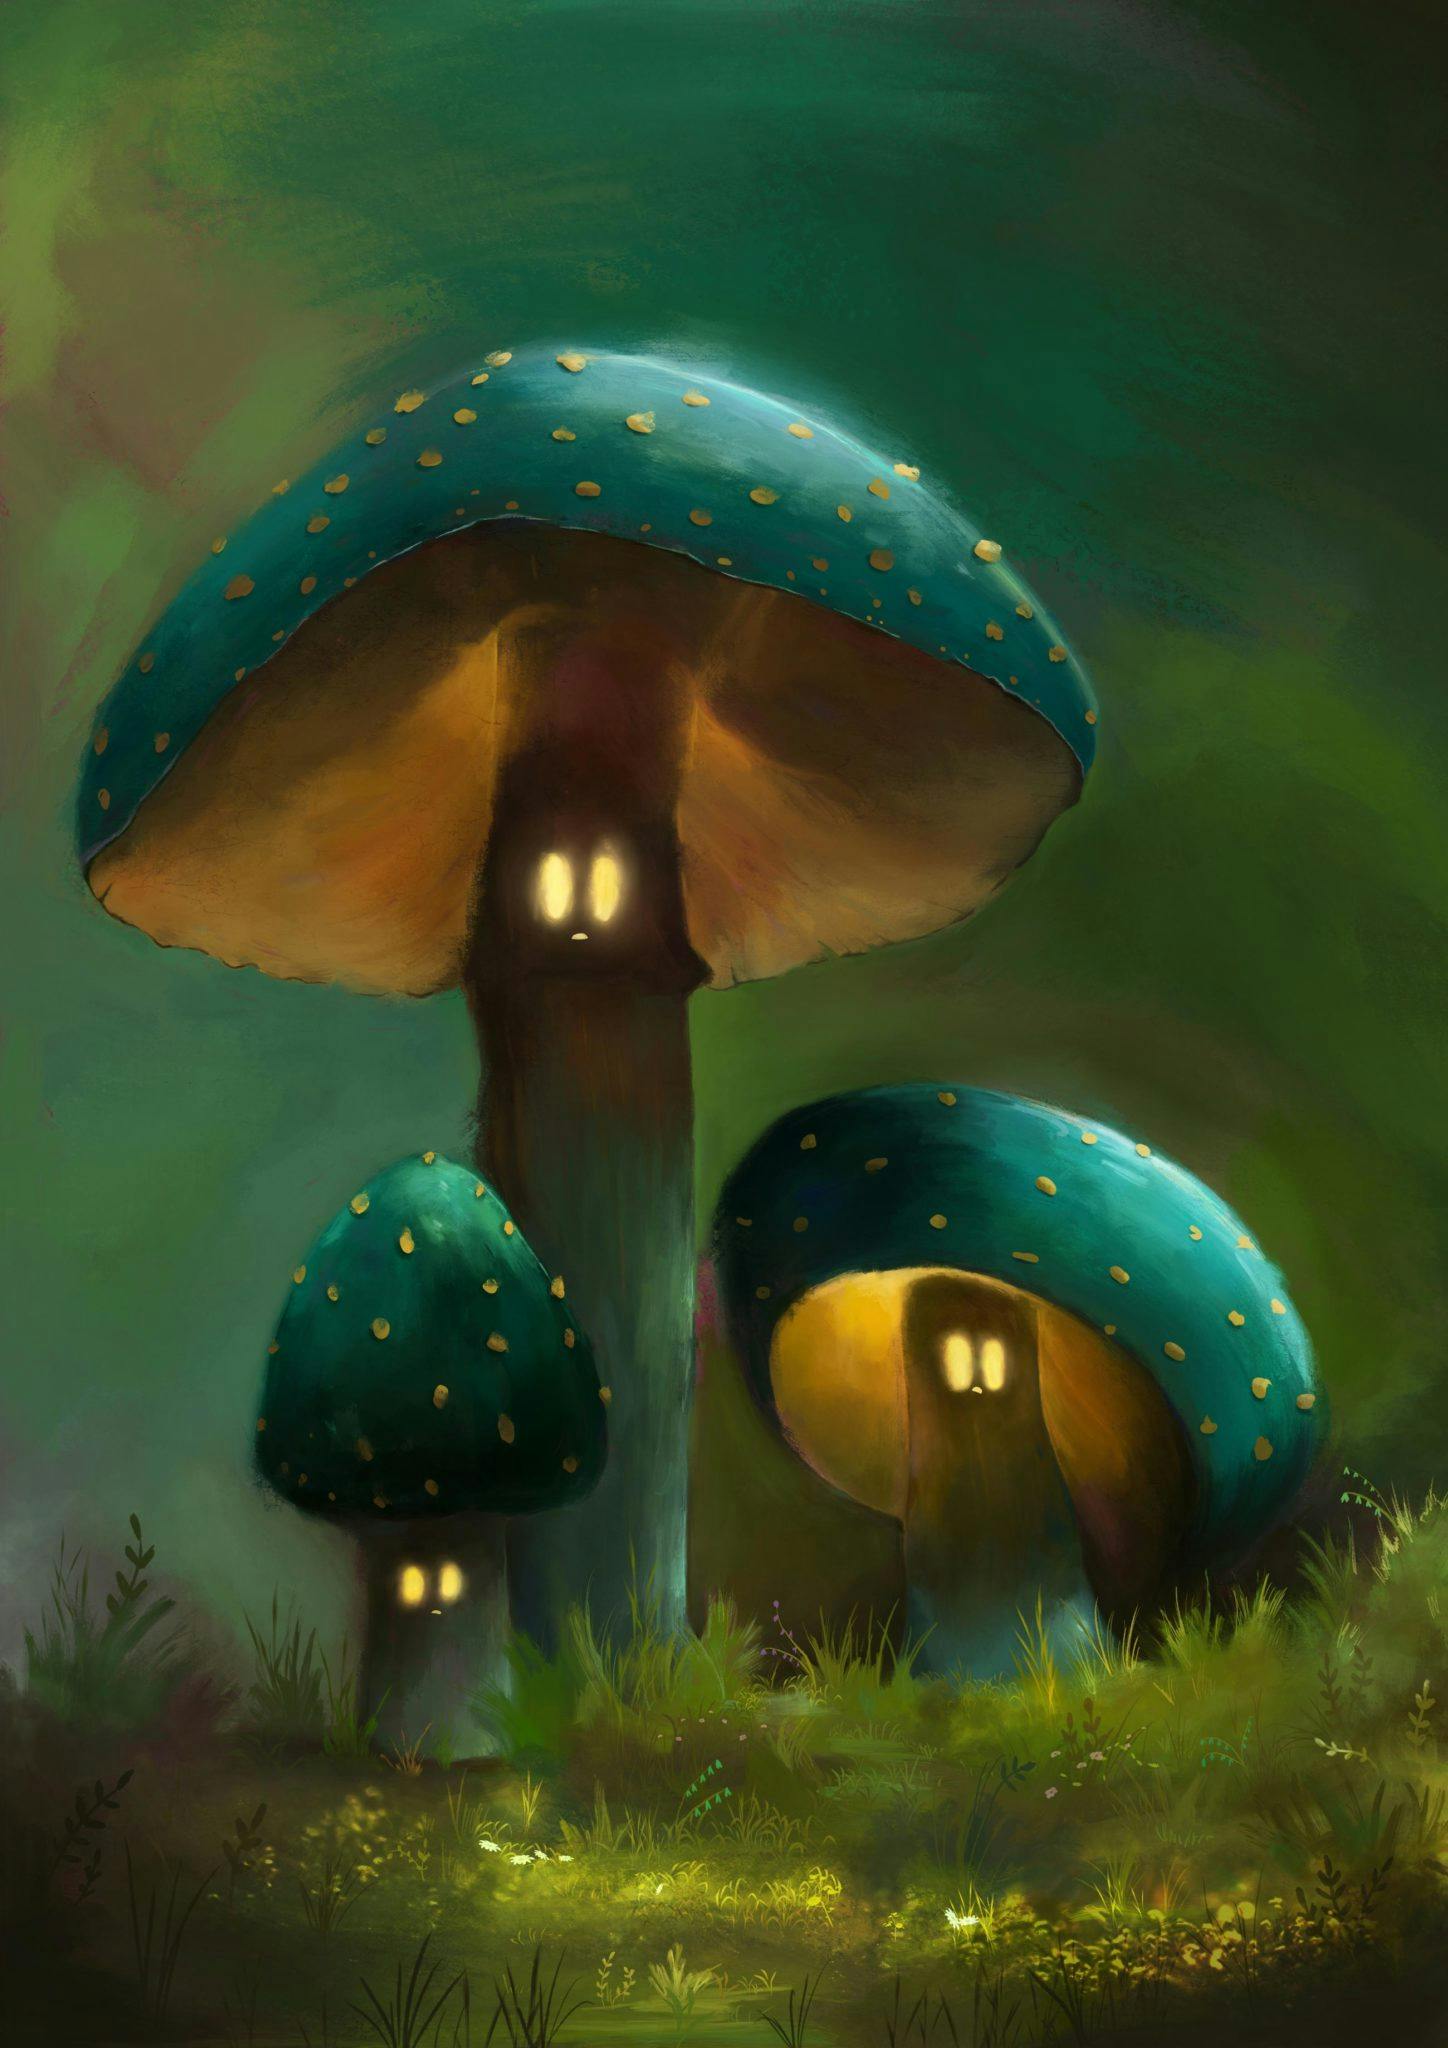 A glowing mushroom family